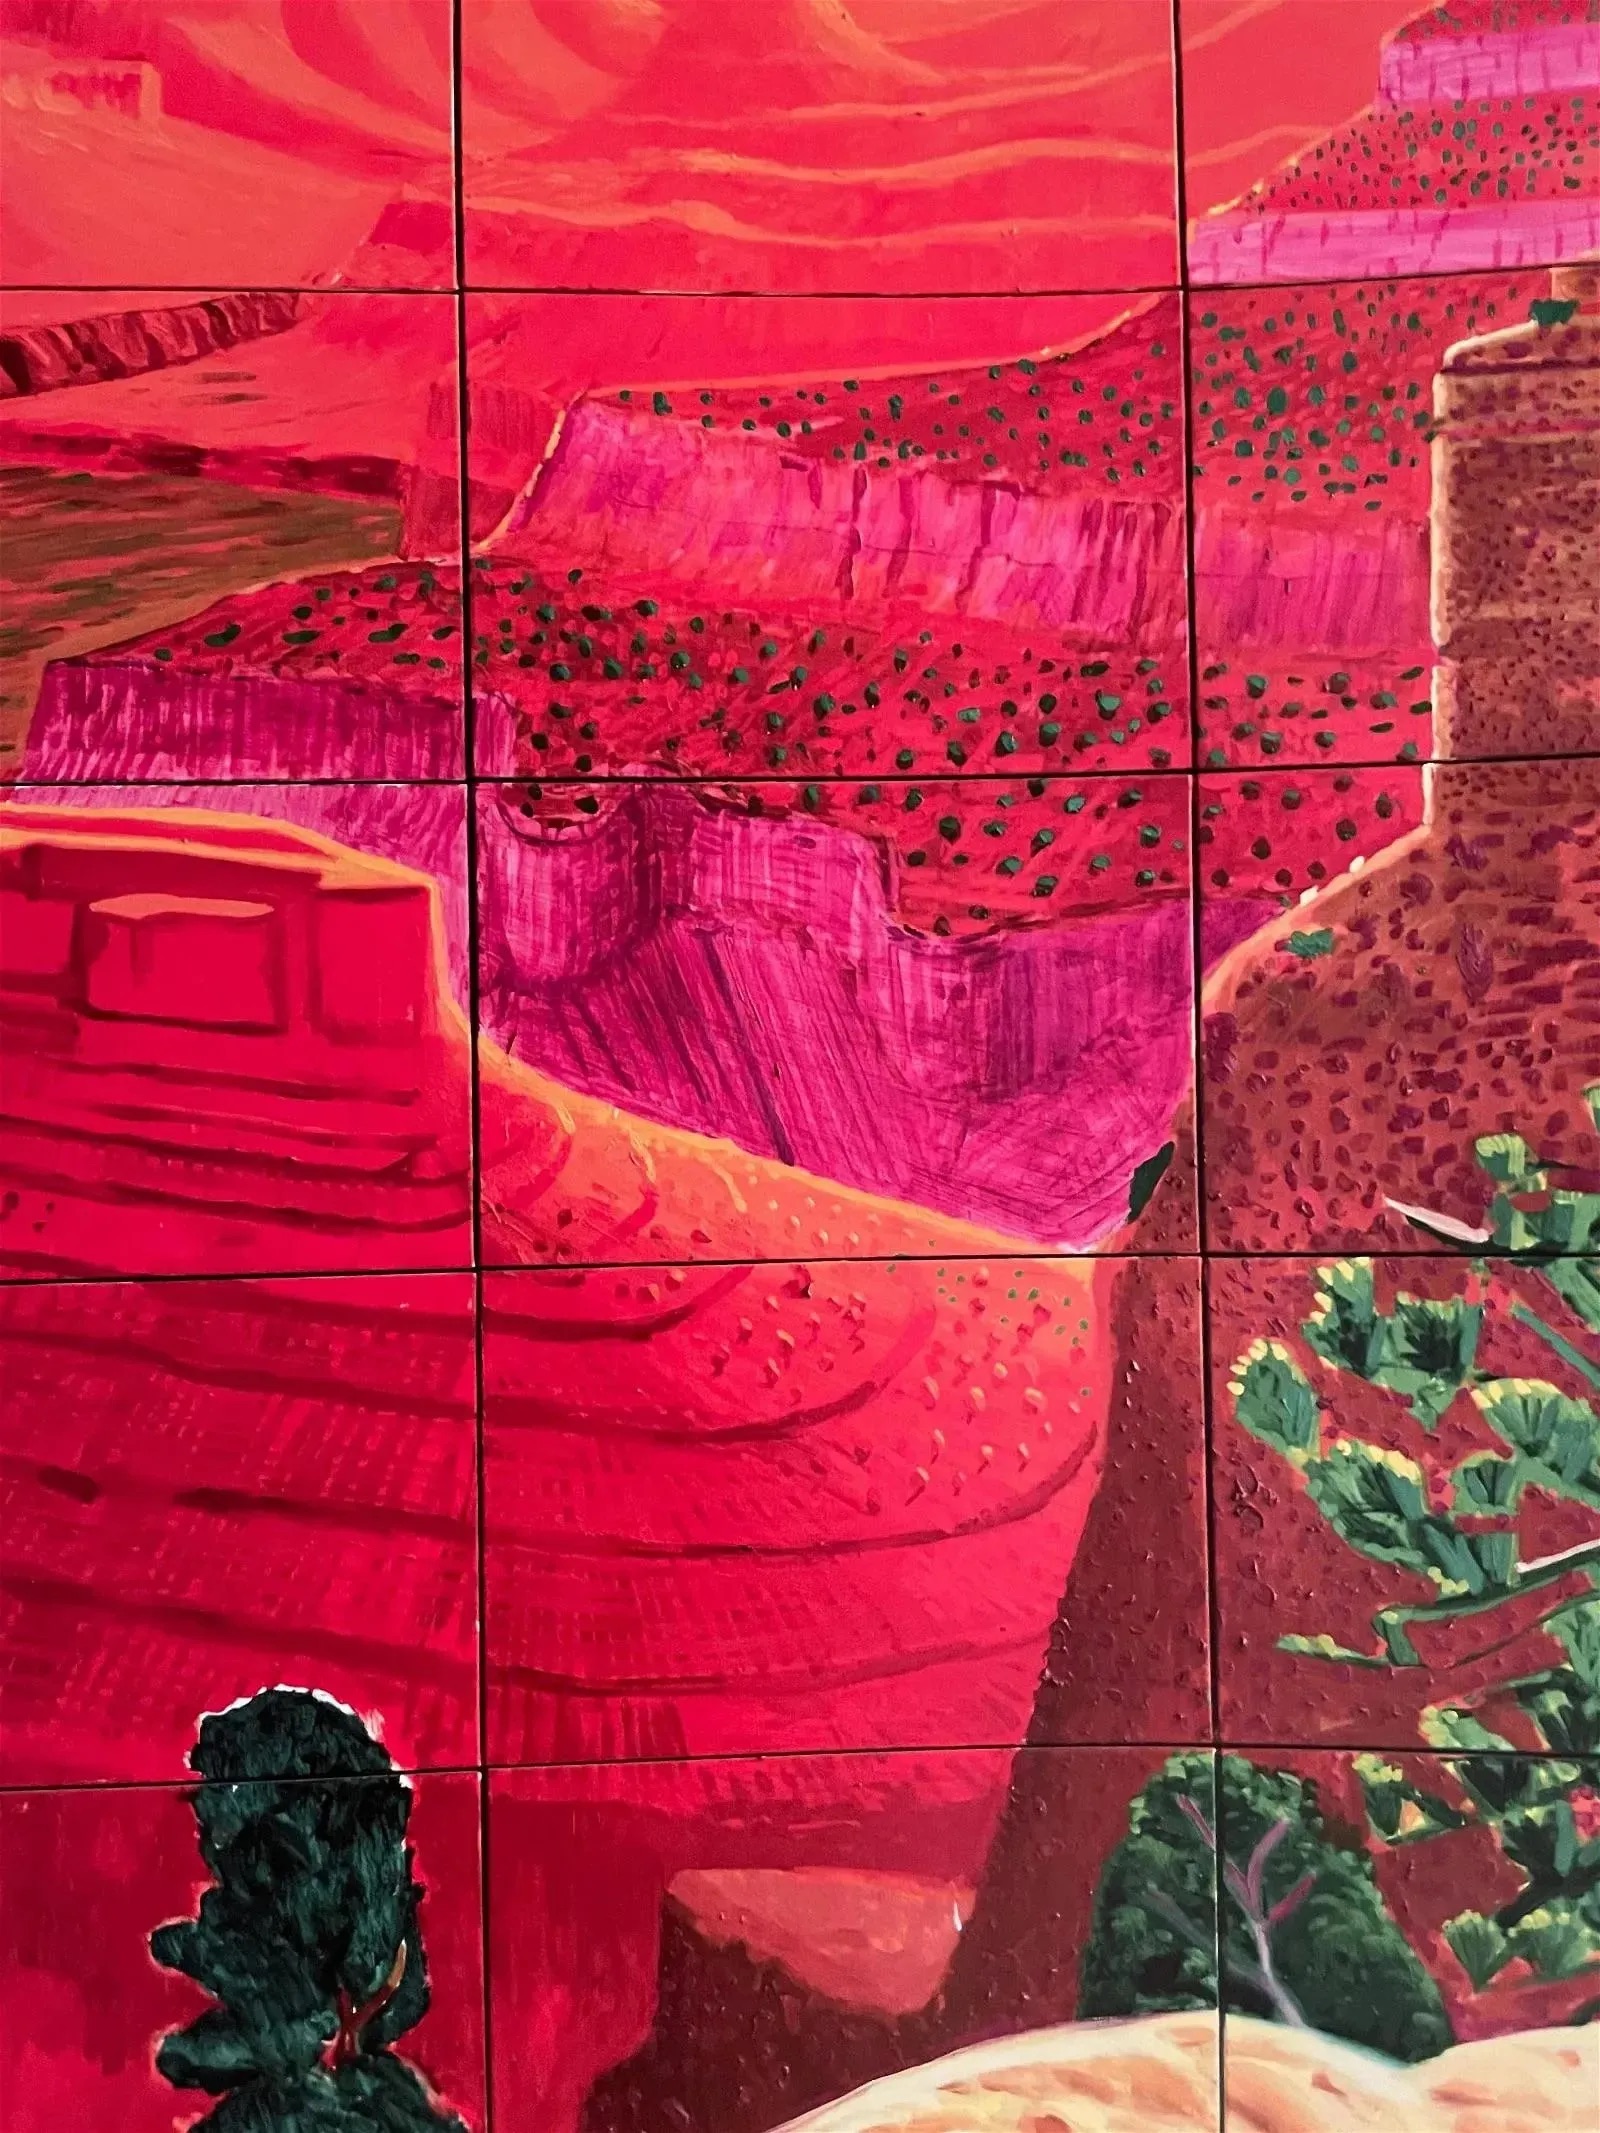 David Hockney "A Closer Grand Canyon, 1998" Offset Lithograph - Image 5 of 6